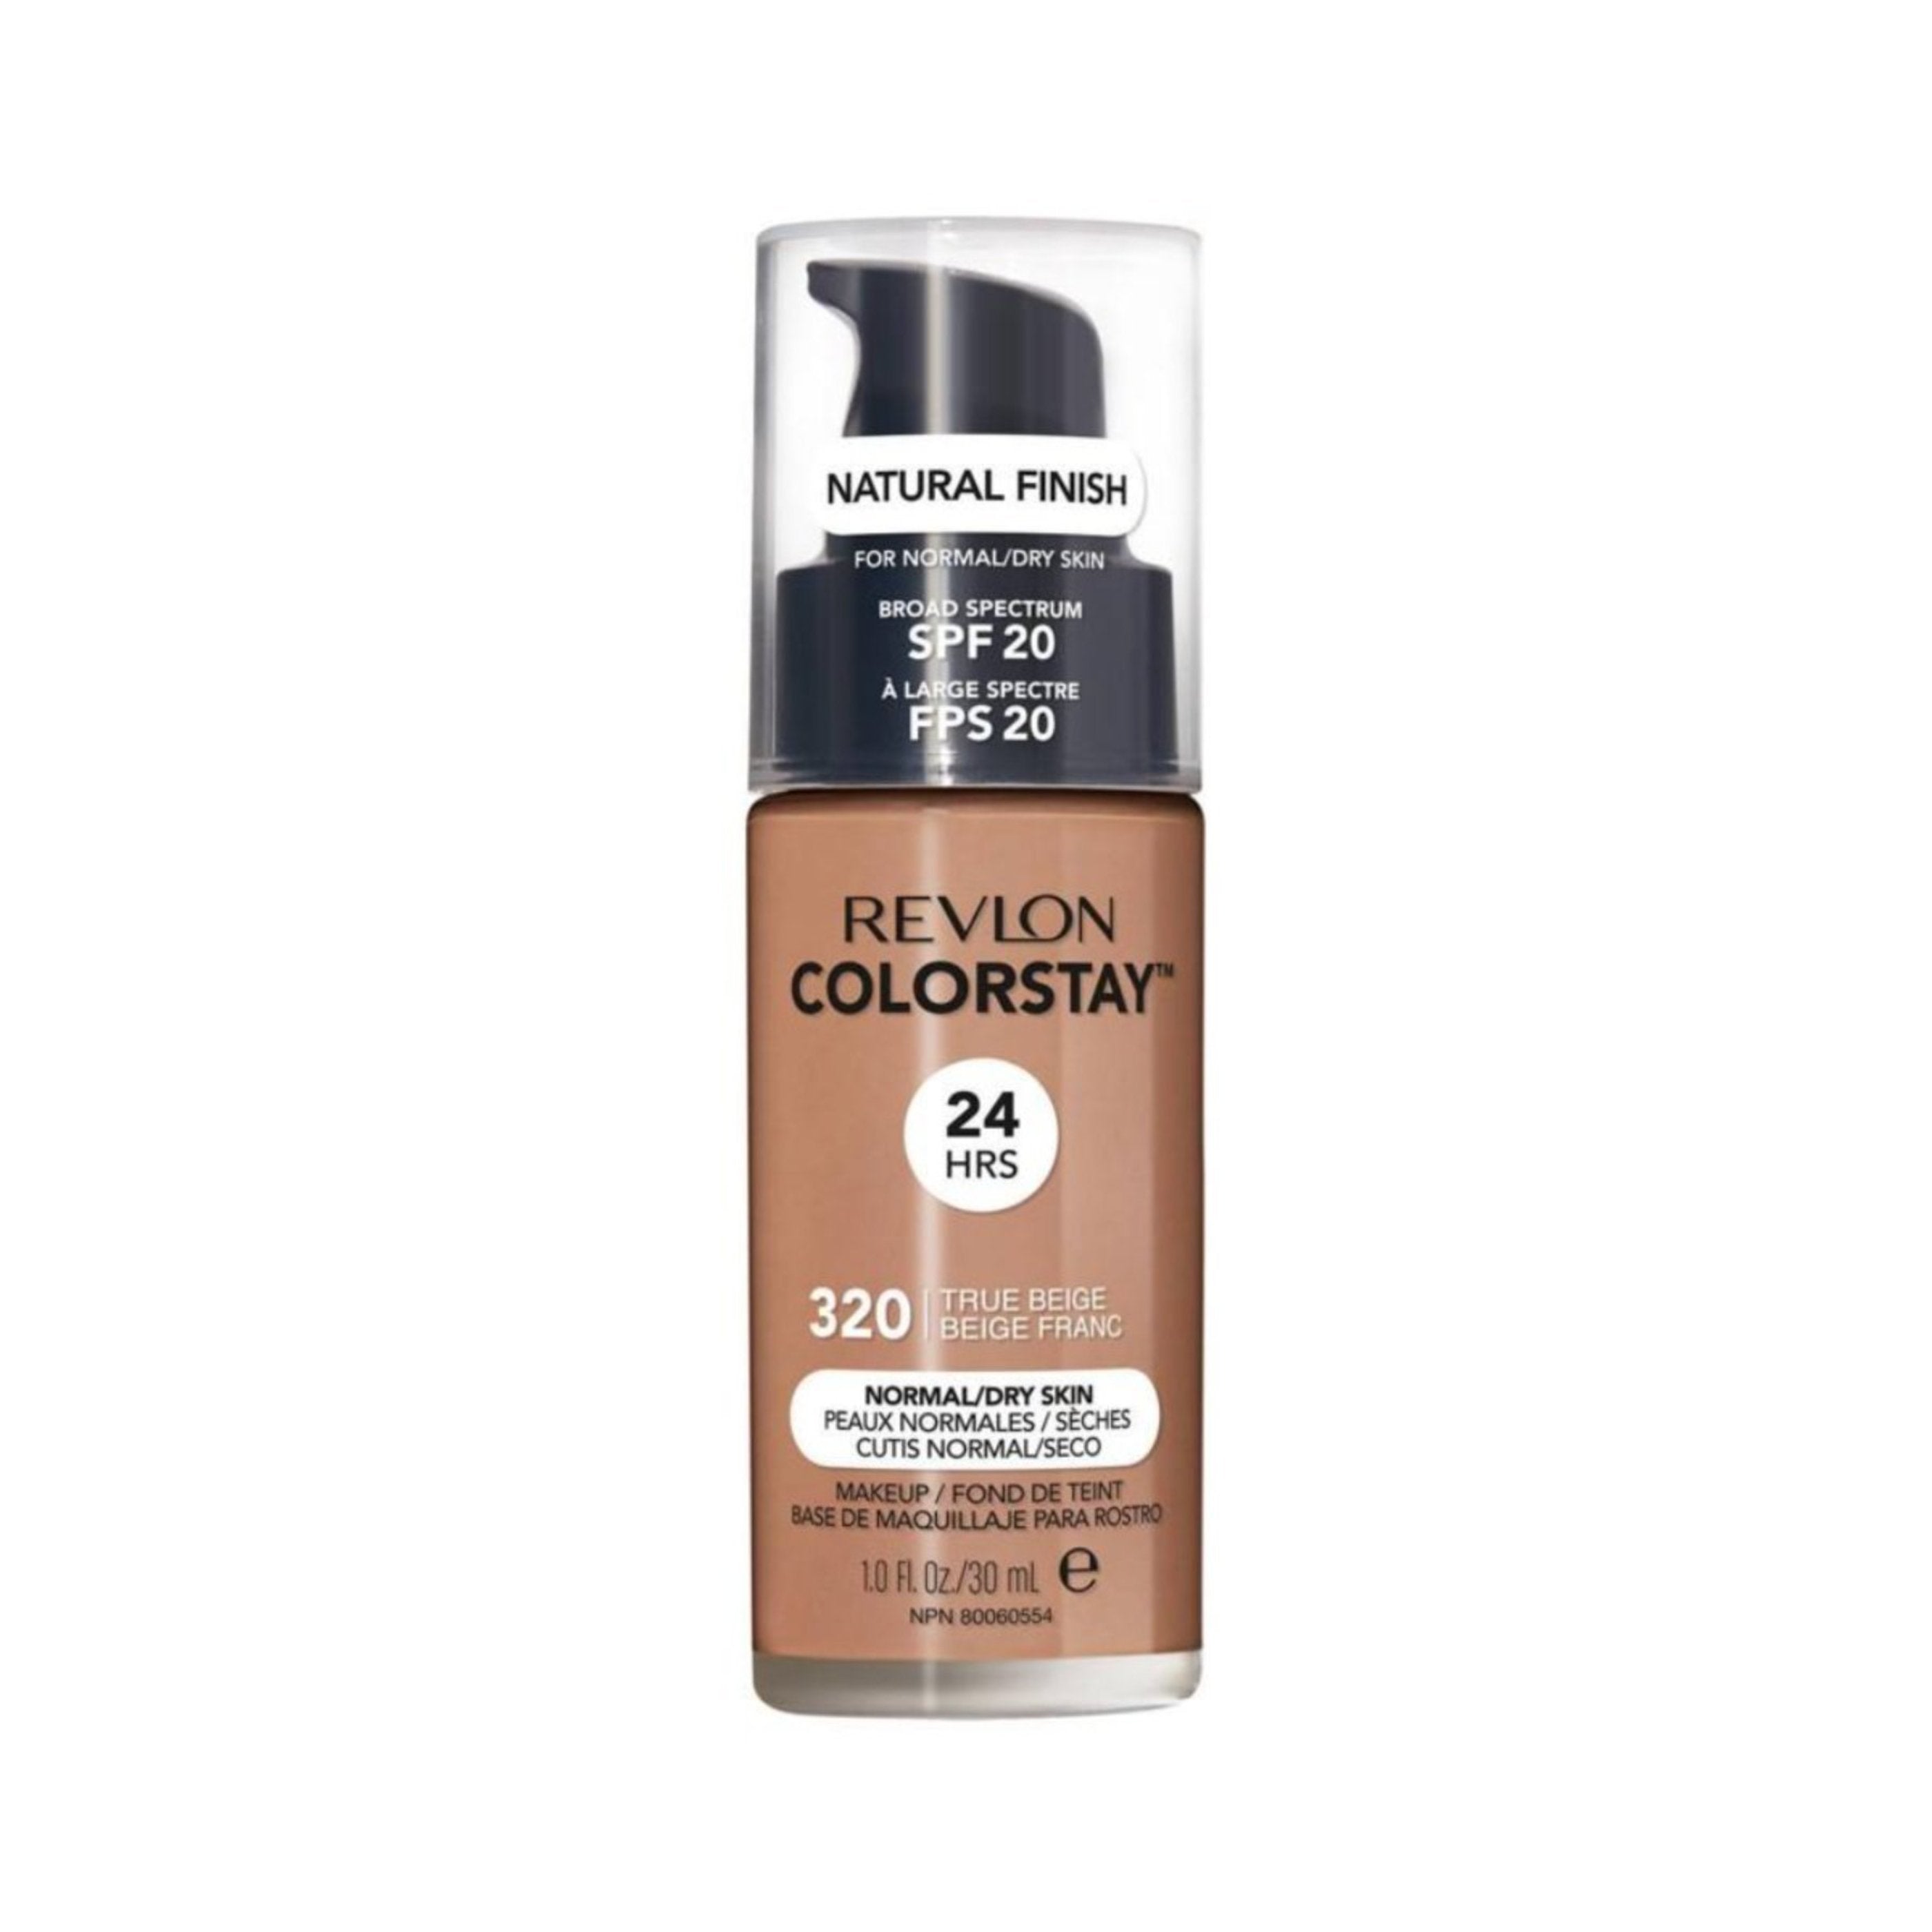 Revlon ColorStay Makeup, Normal/Dry Skin, 320 True Beige - ADDROS.COM